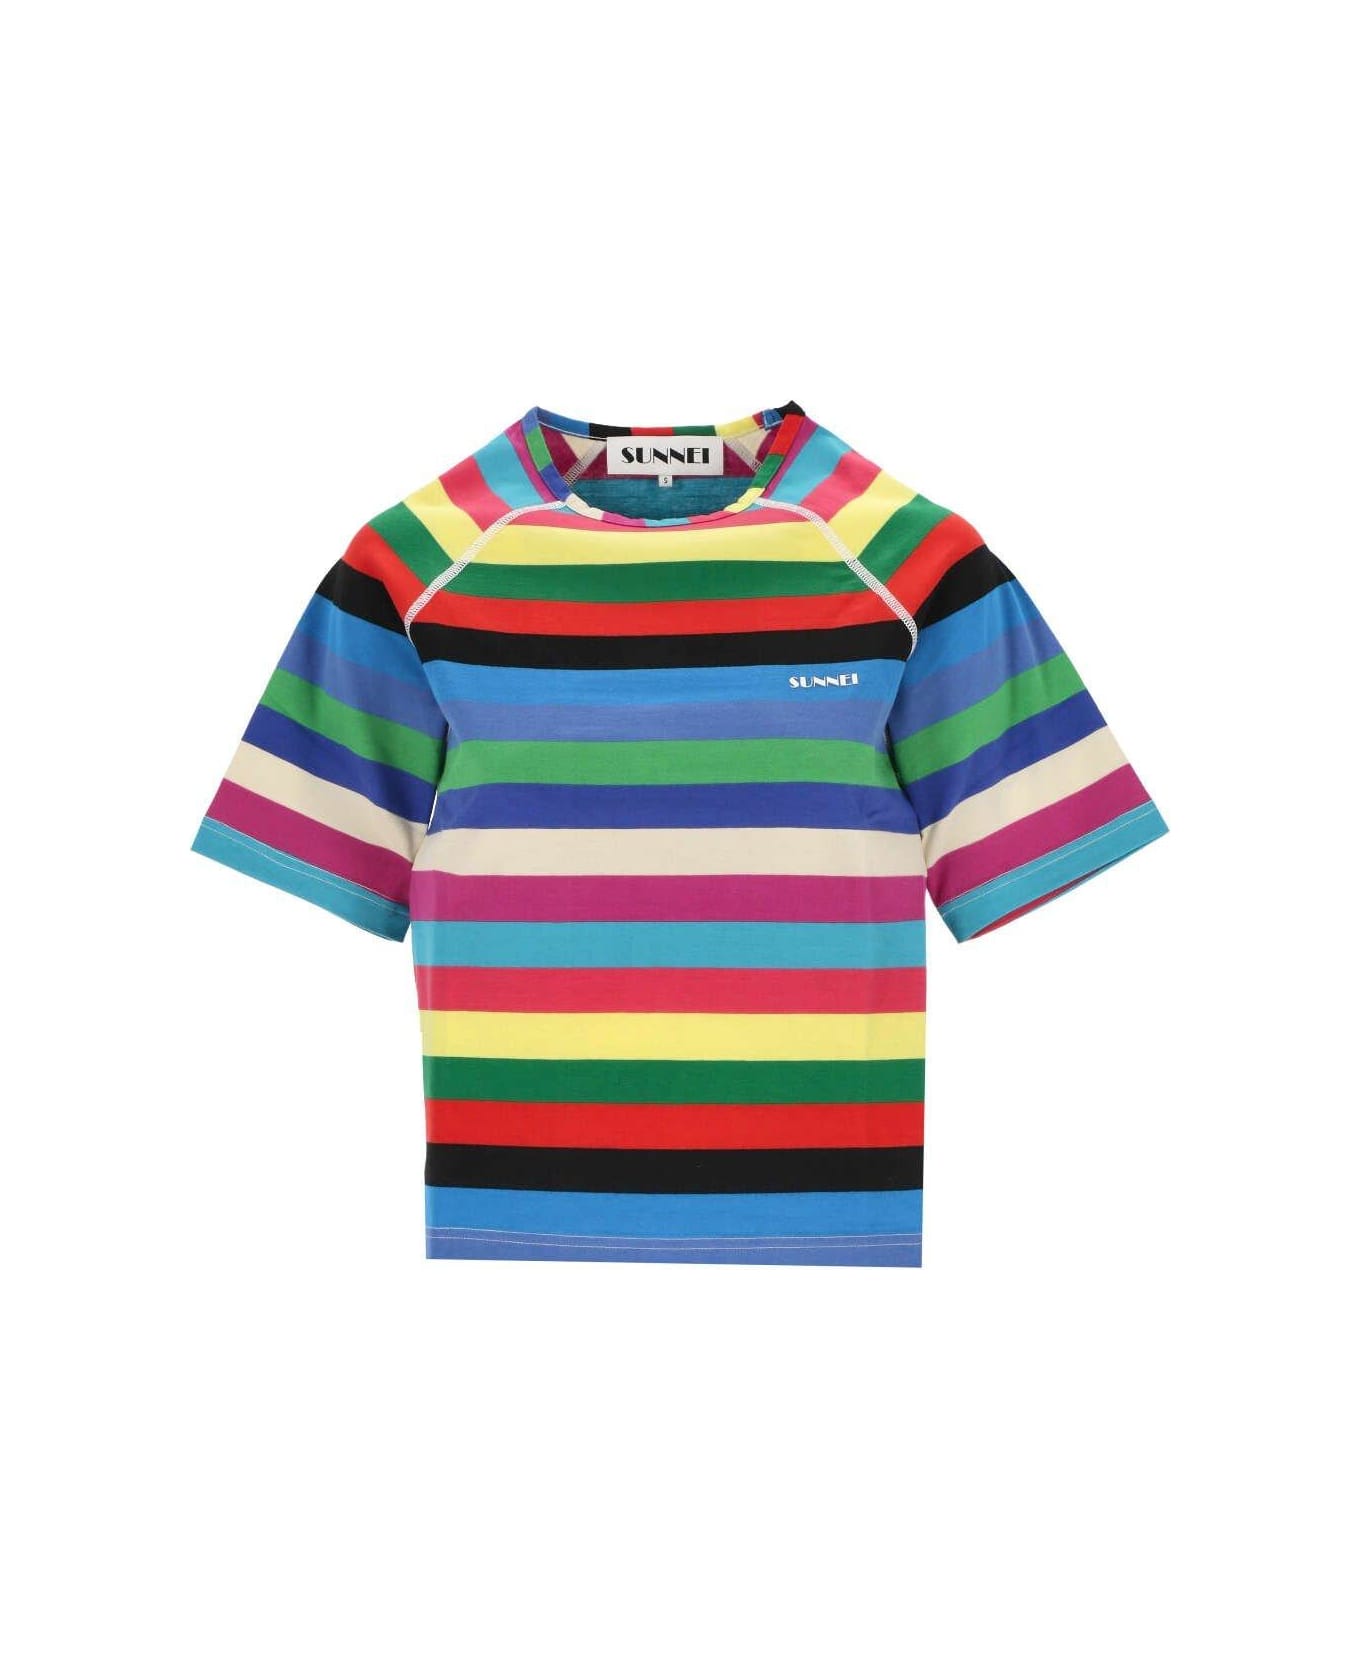 Sunnei Logo Printed Striped T-shirt - Multicolor